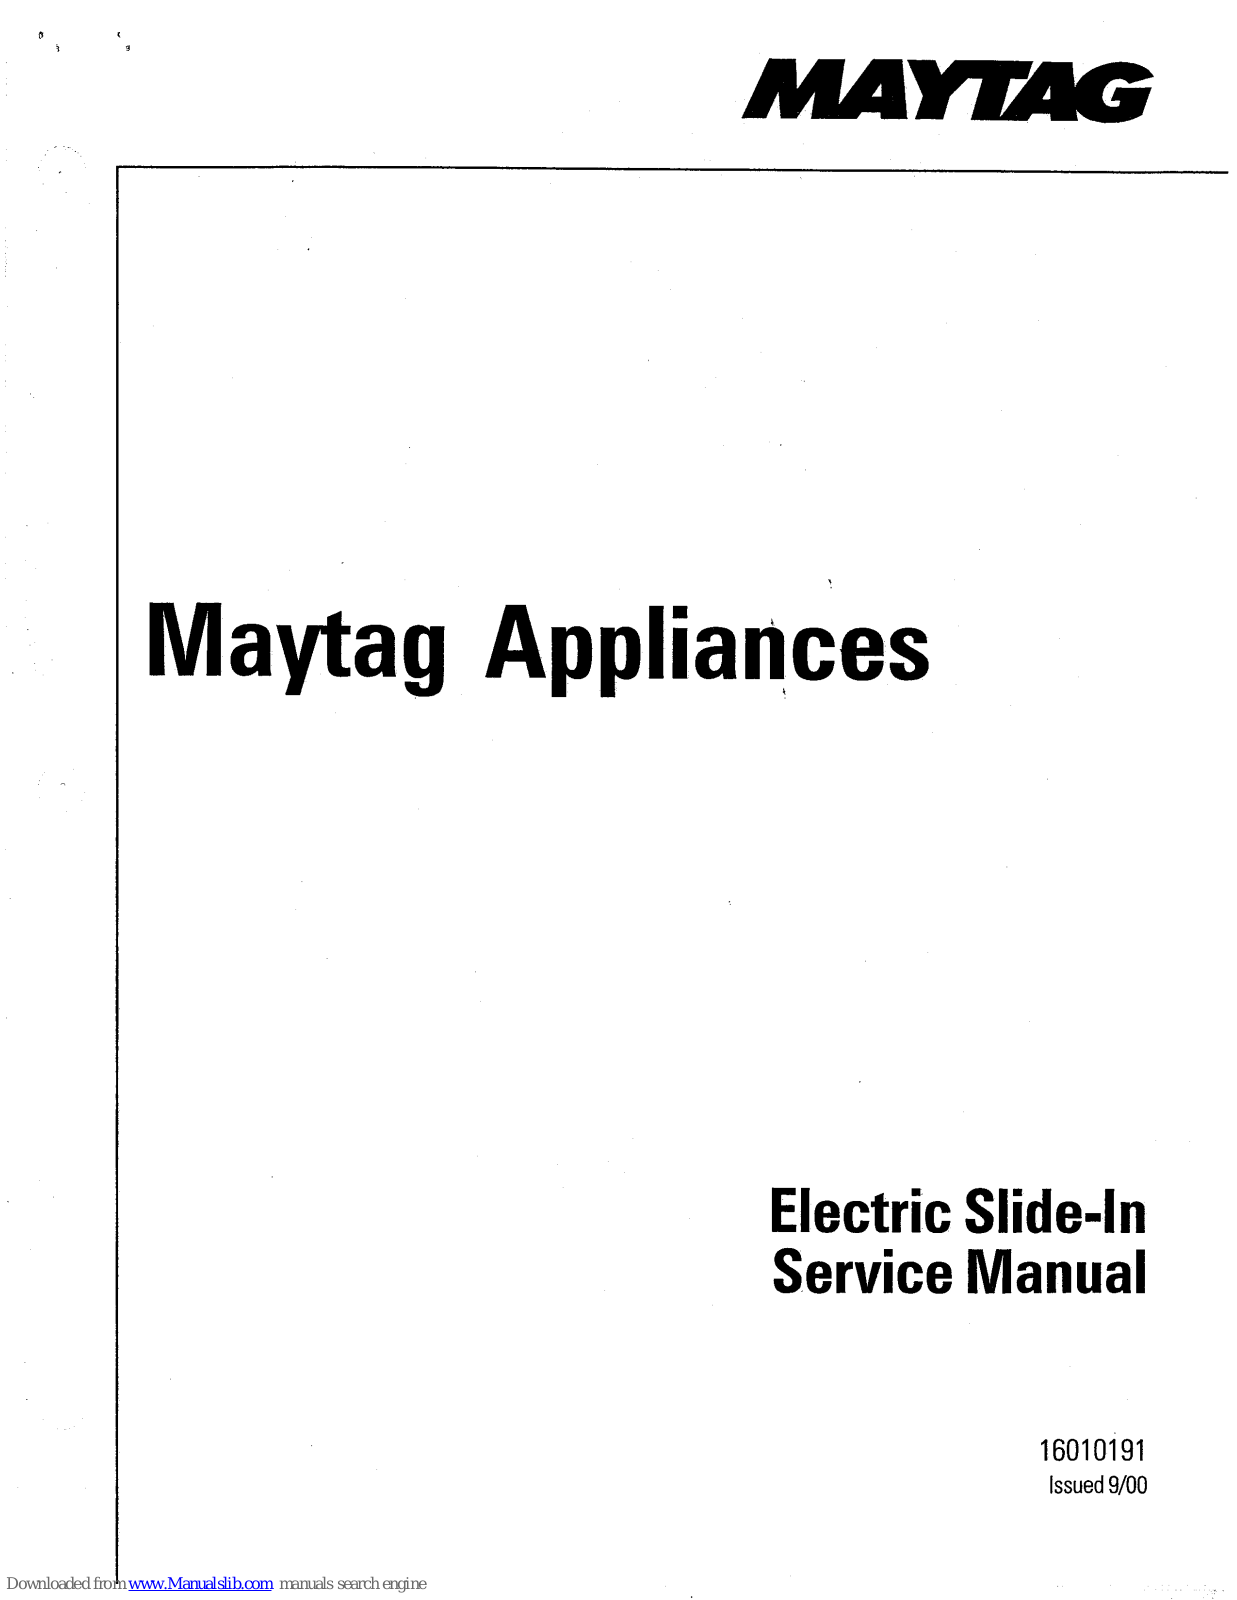 Maytag SVD48600, SEG196, SVD48600x series, CDE8520, SVD48600P Service Manual